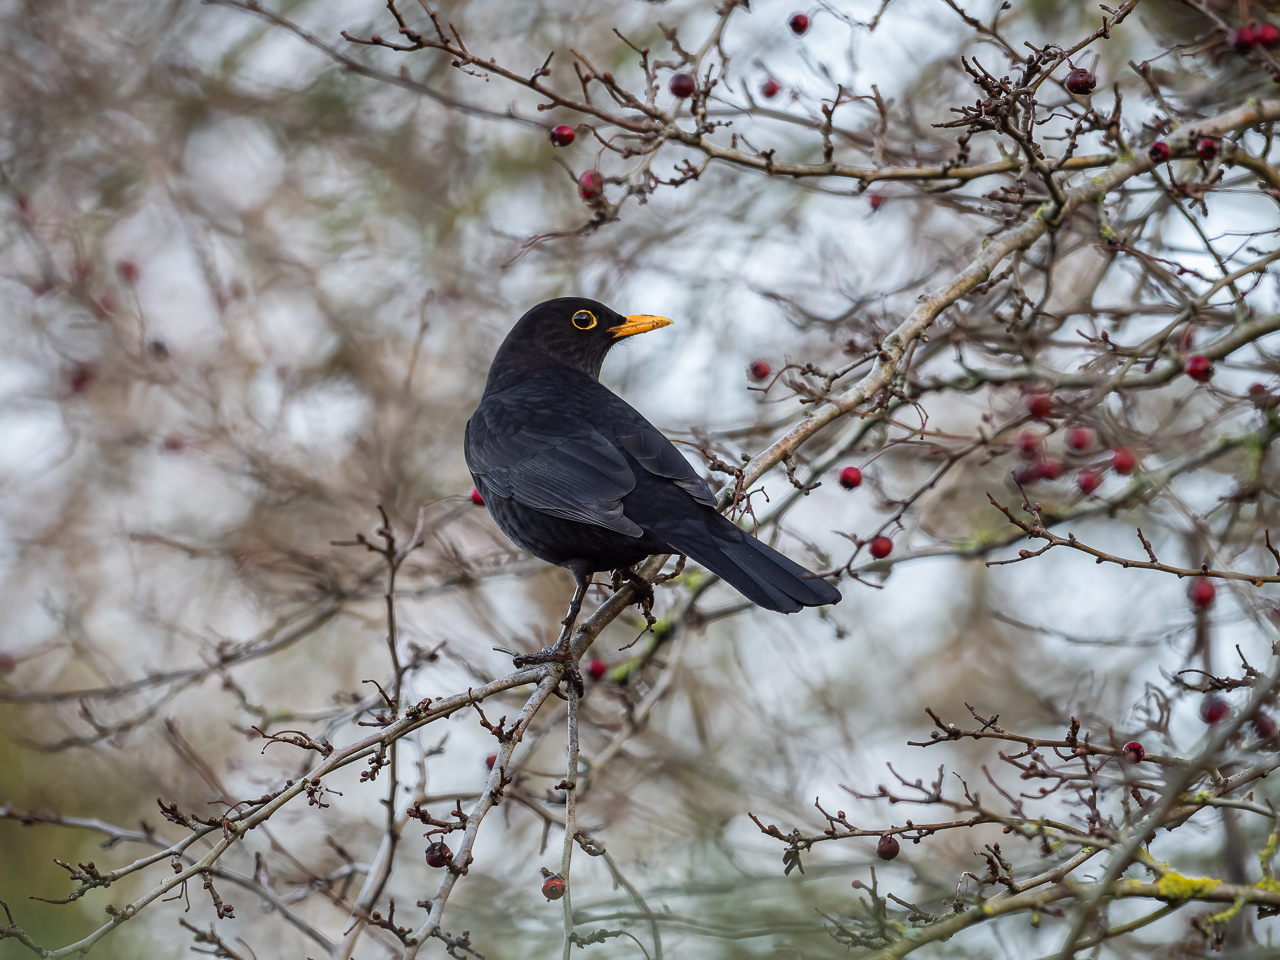 Blackbirds are common in Beddington Farmlands